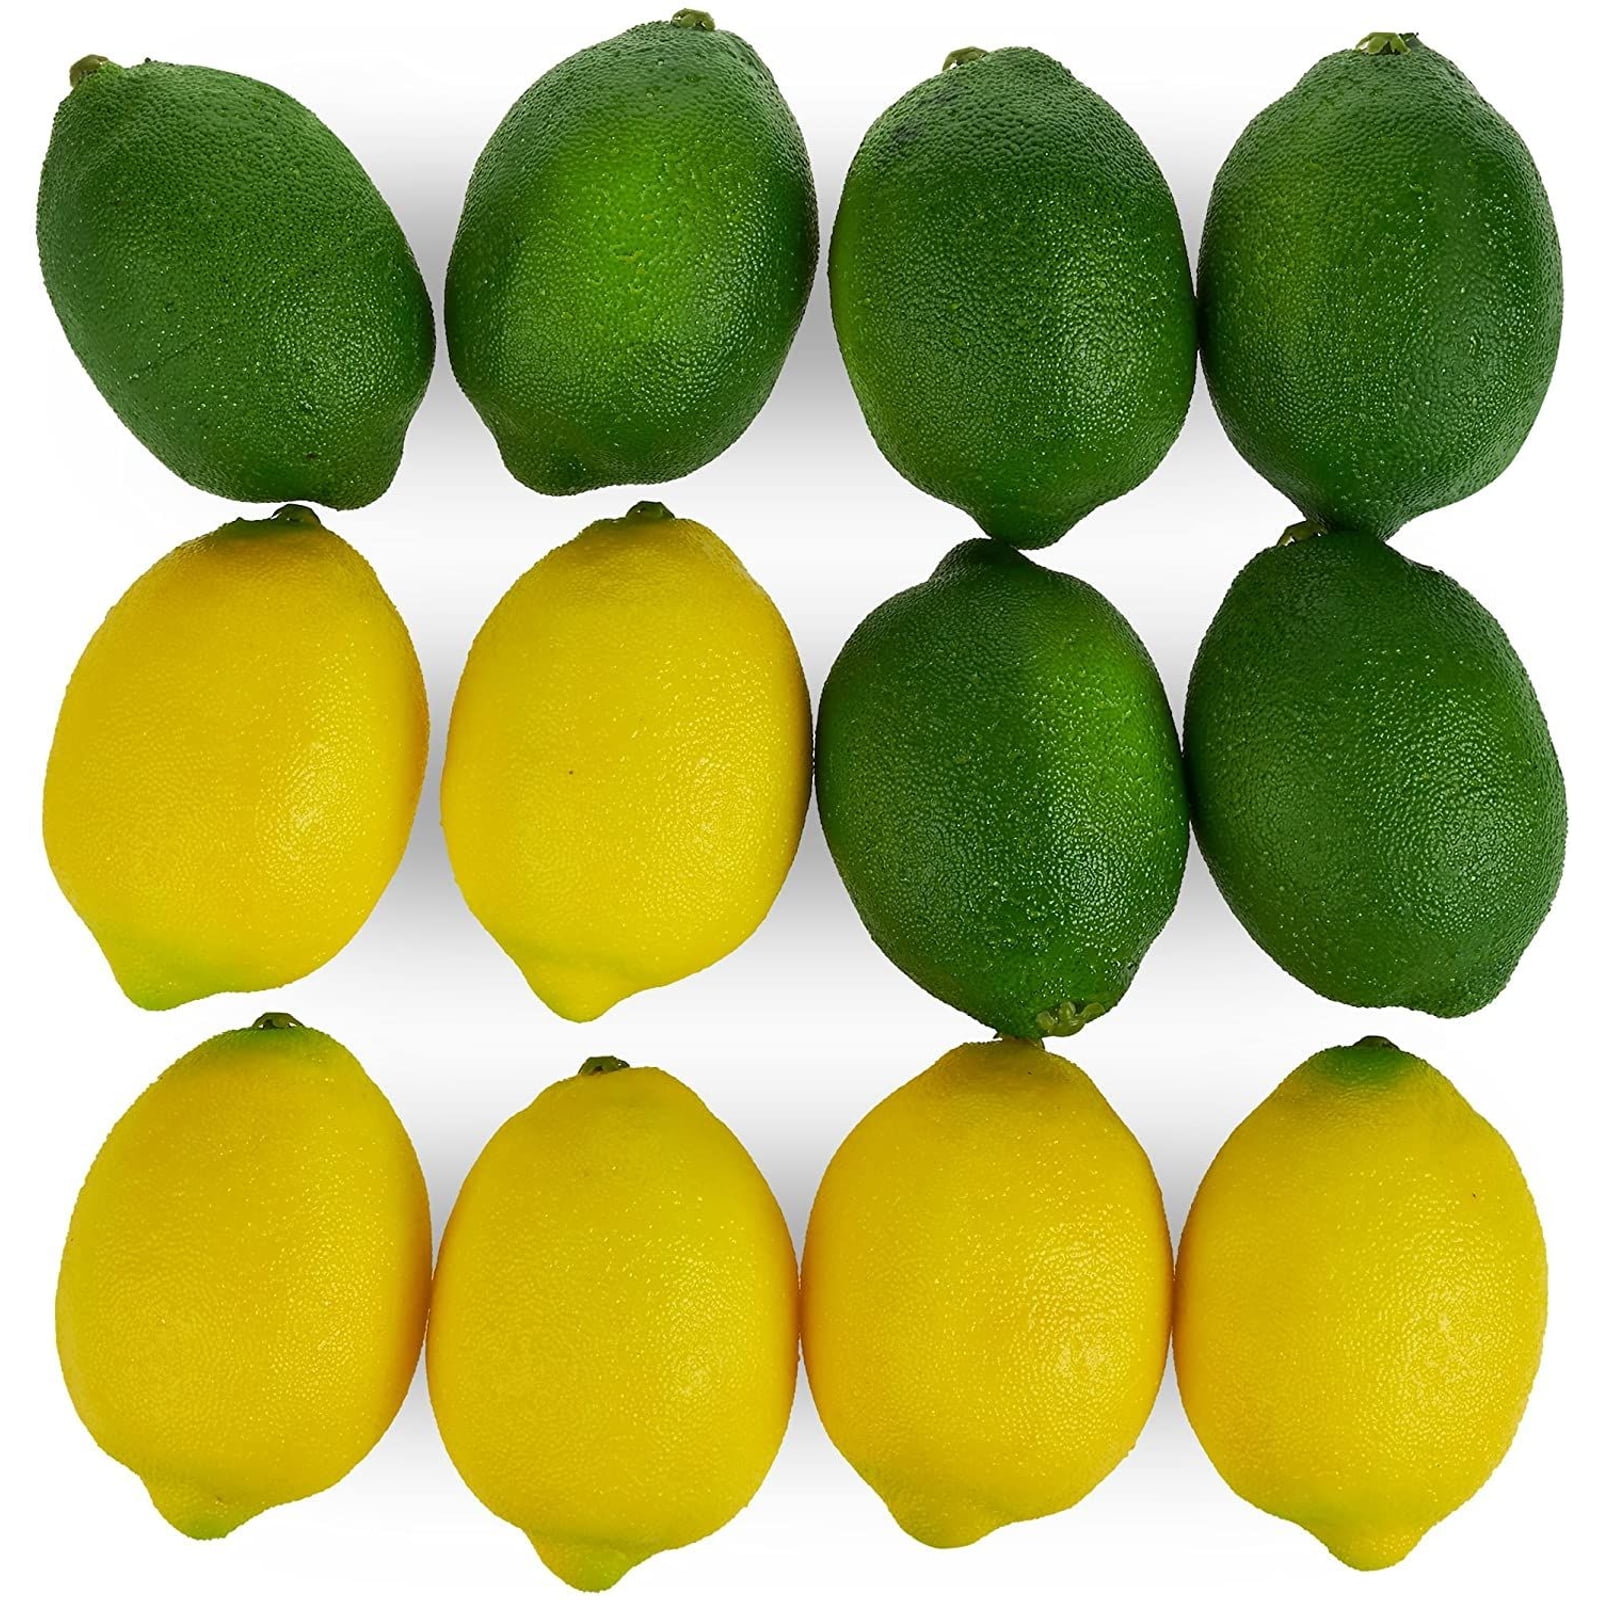 NEW Lifelike Artificial Lemon Plastic Fake Fruit Food Home Decor Decoration x1 